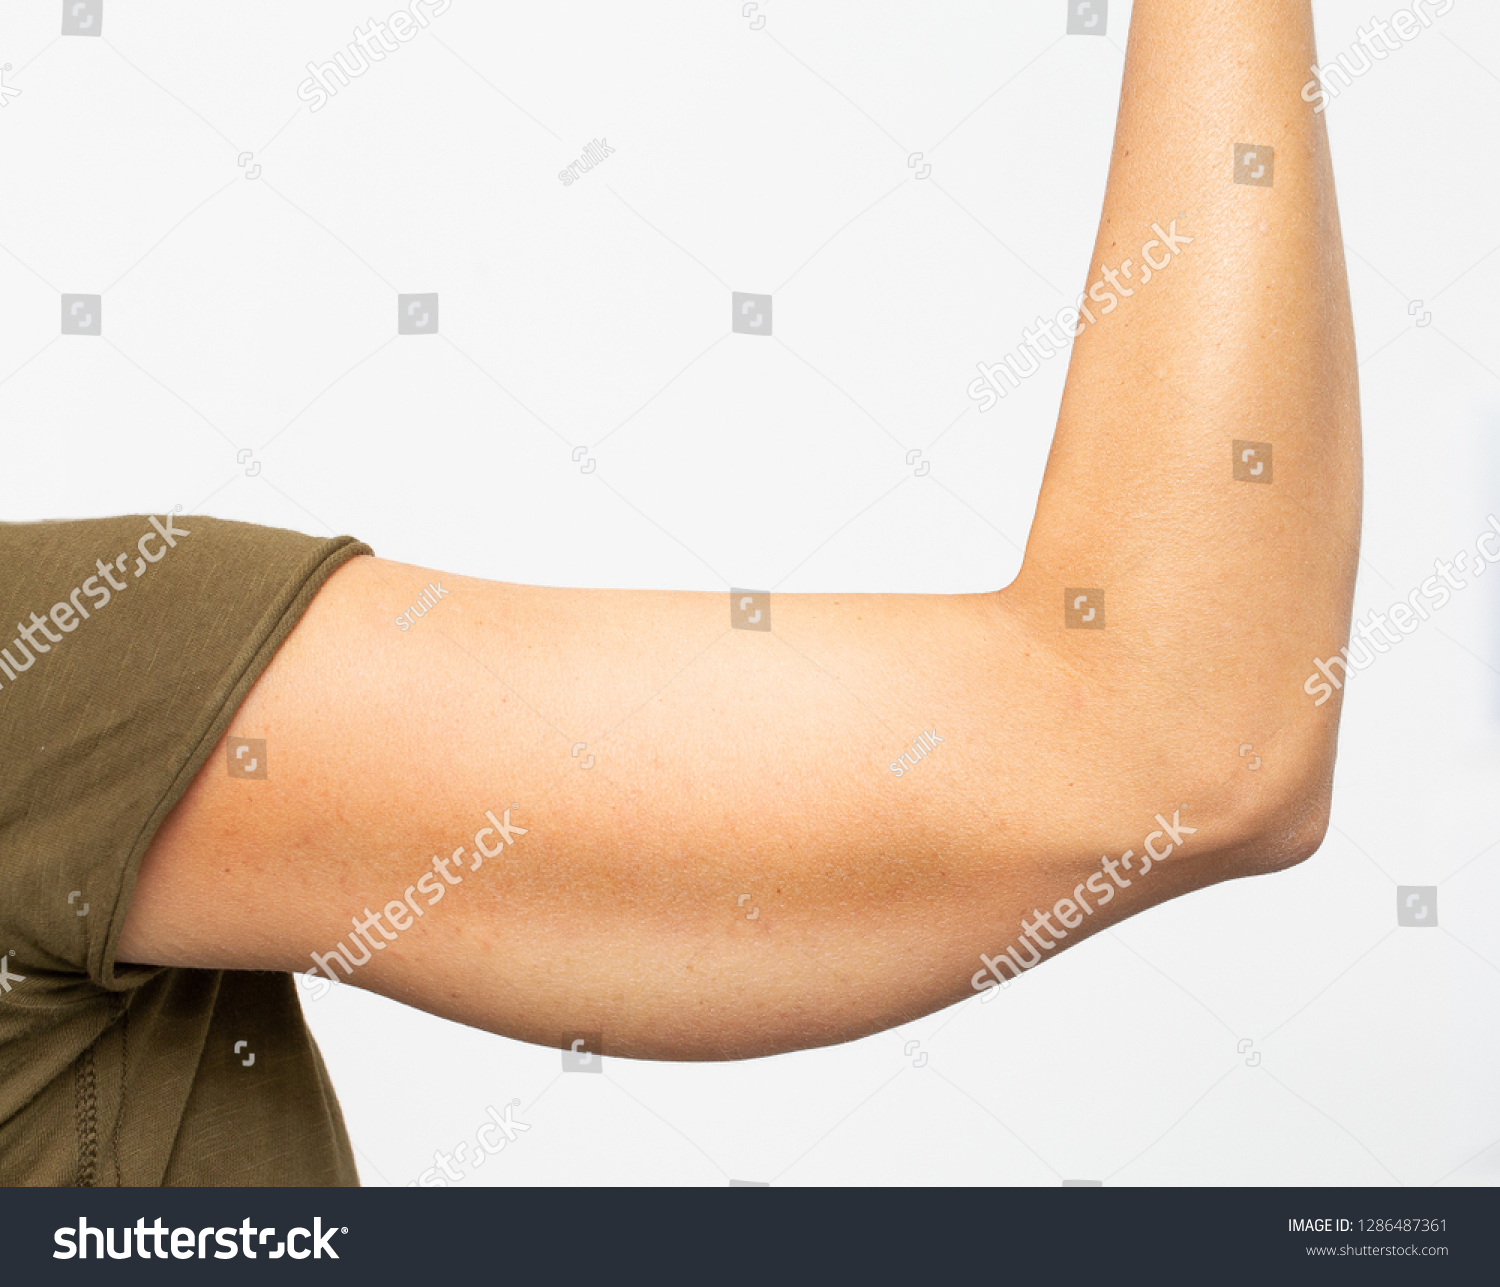 Sagging Skin Under Arms Stock Photo 1286487361 Shutterstock